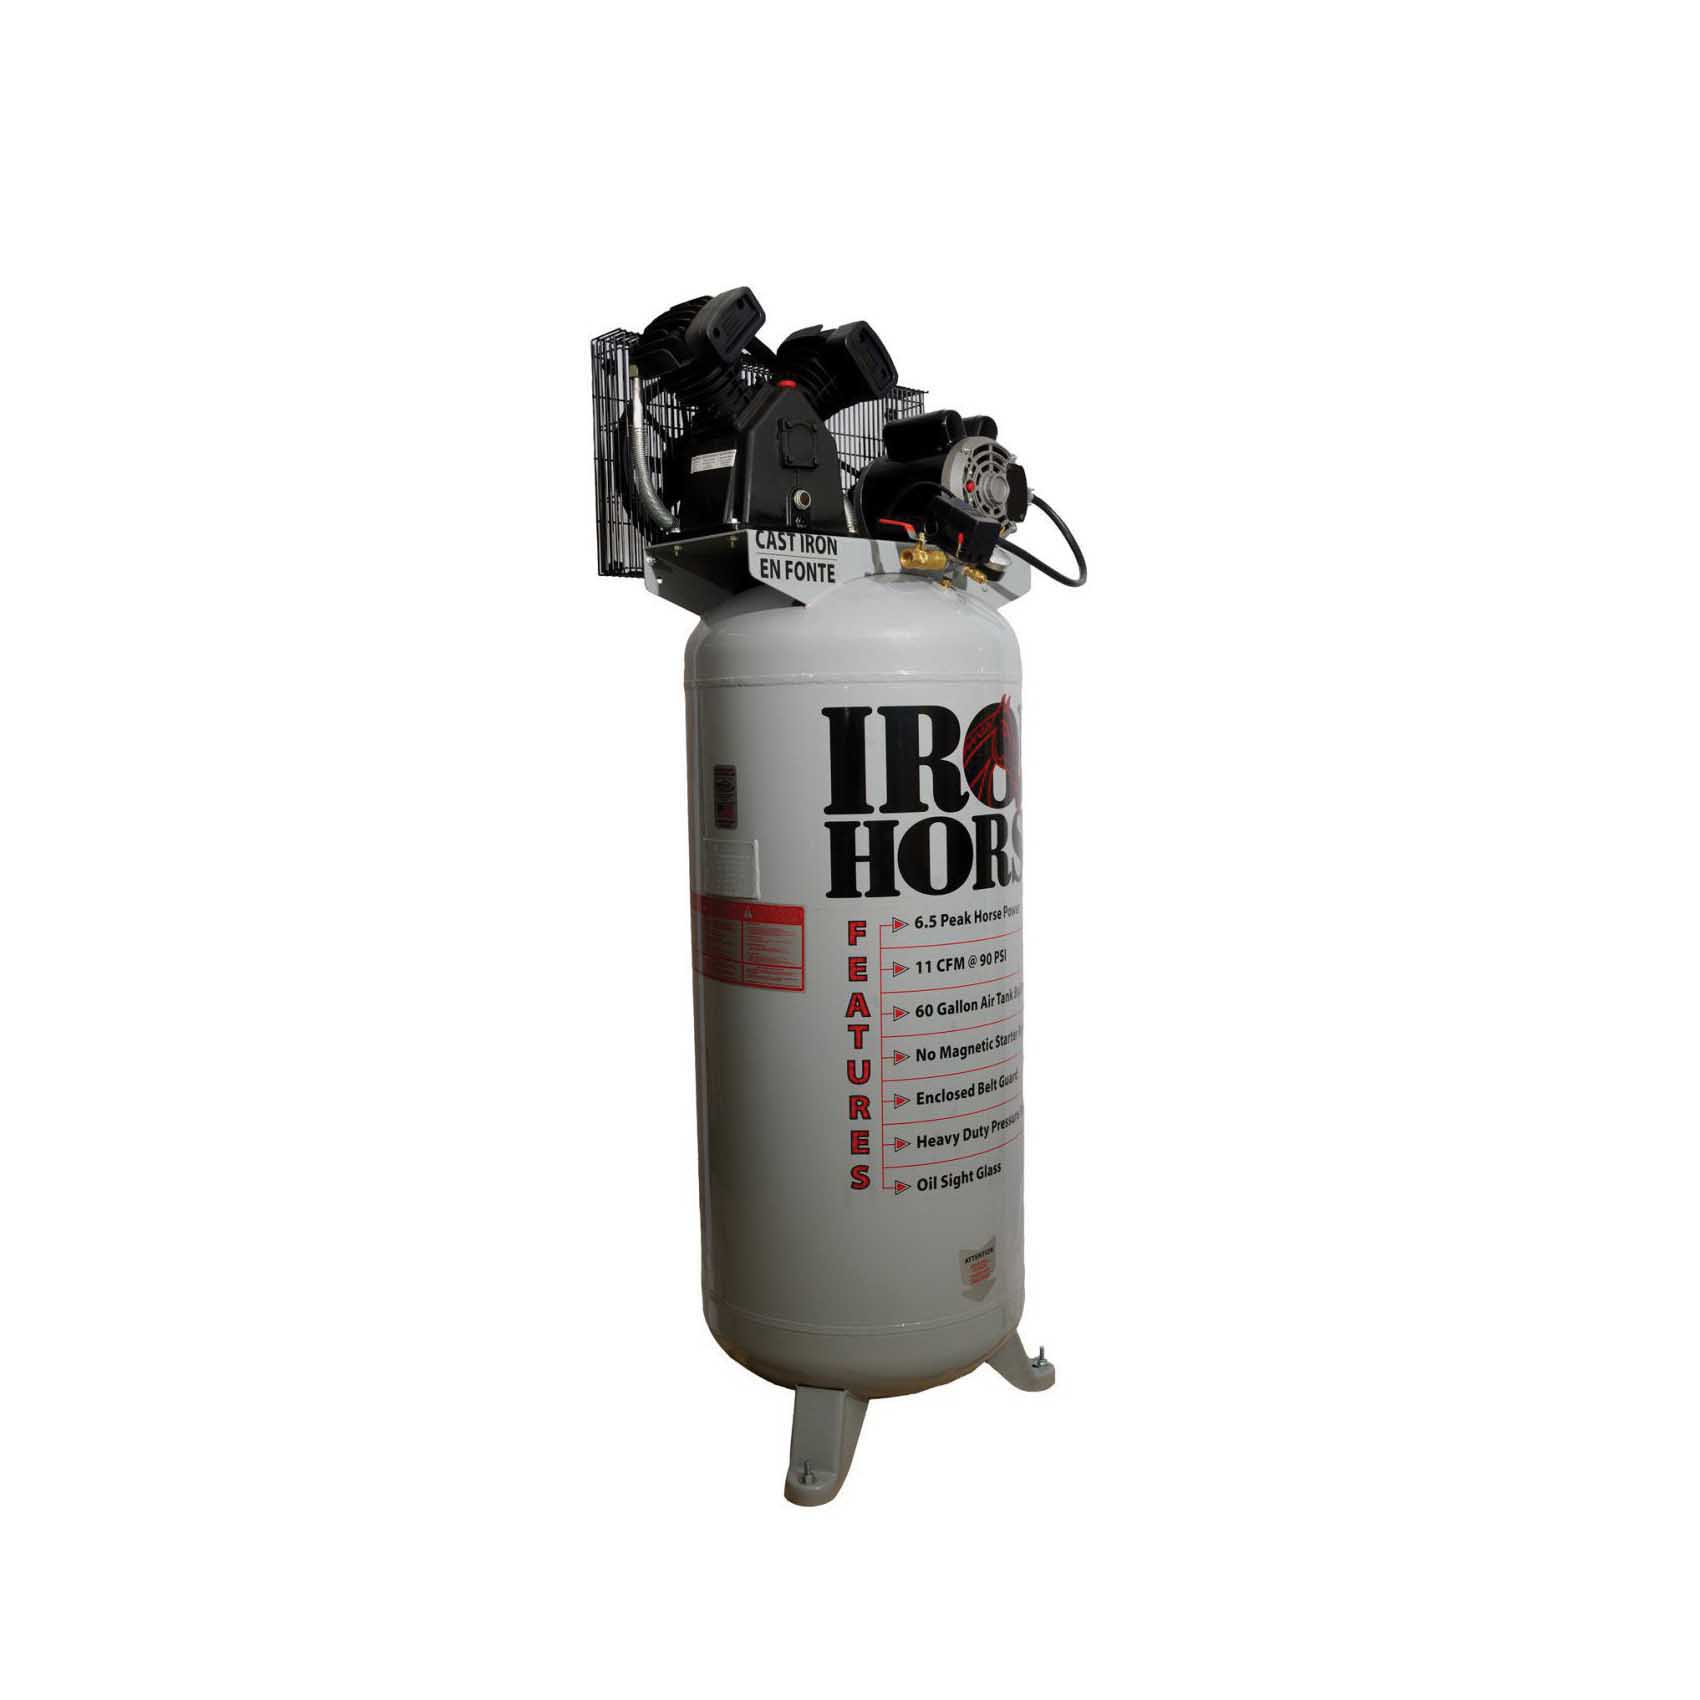 IHD6160V1 Air Compressor, Tool Only, 60 gal Tank, 6.5 hp, 208/230 V, 150 psi Pressure, 11.2 cfm Air